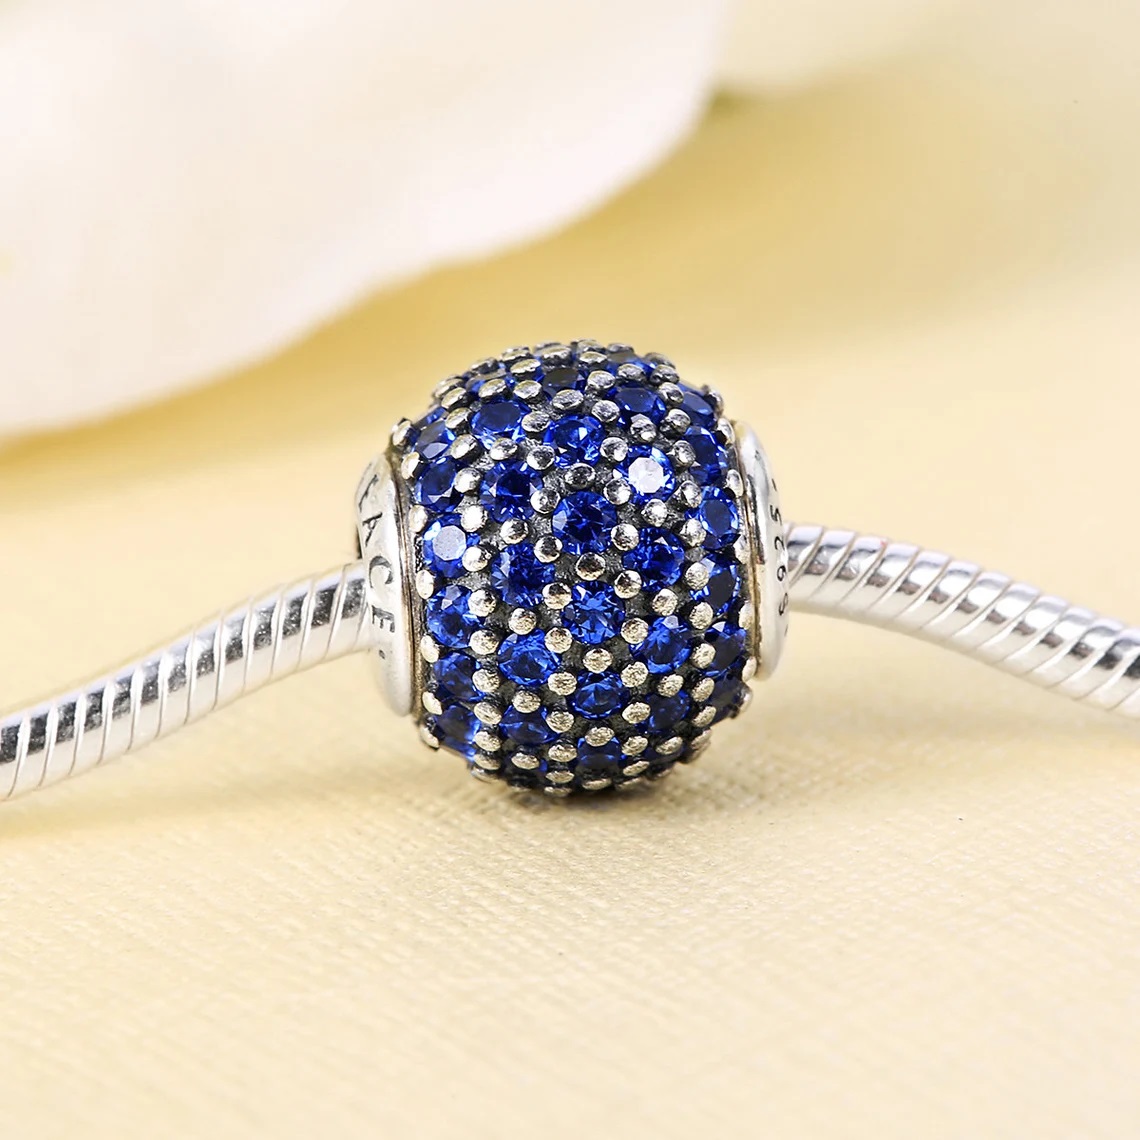 925 Sterling Silver Essence Peace & Blue Pave CZ Bead Only Fits European Jewelry Pandora Essence Style Charm Bracelets